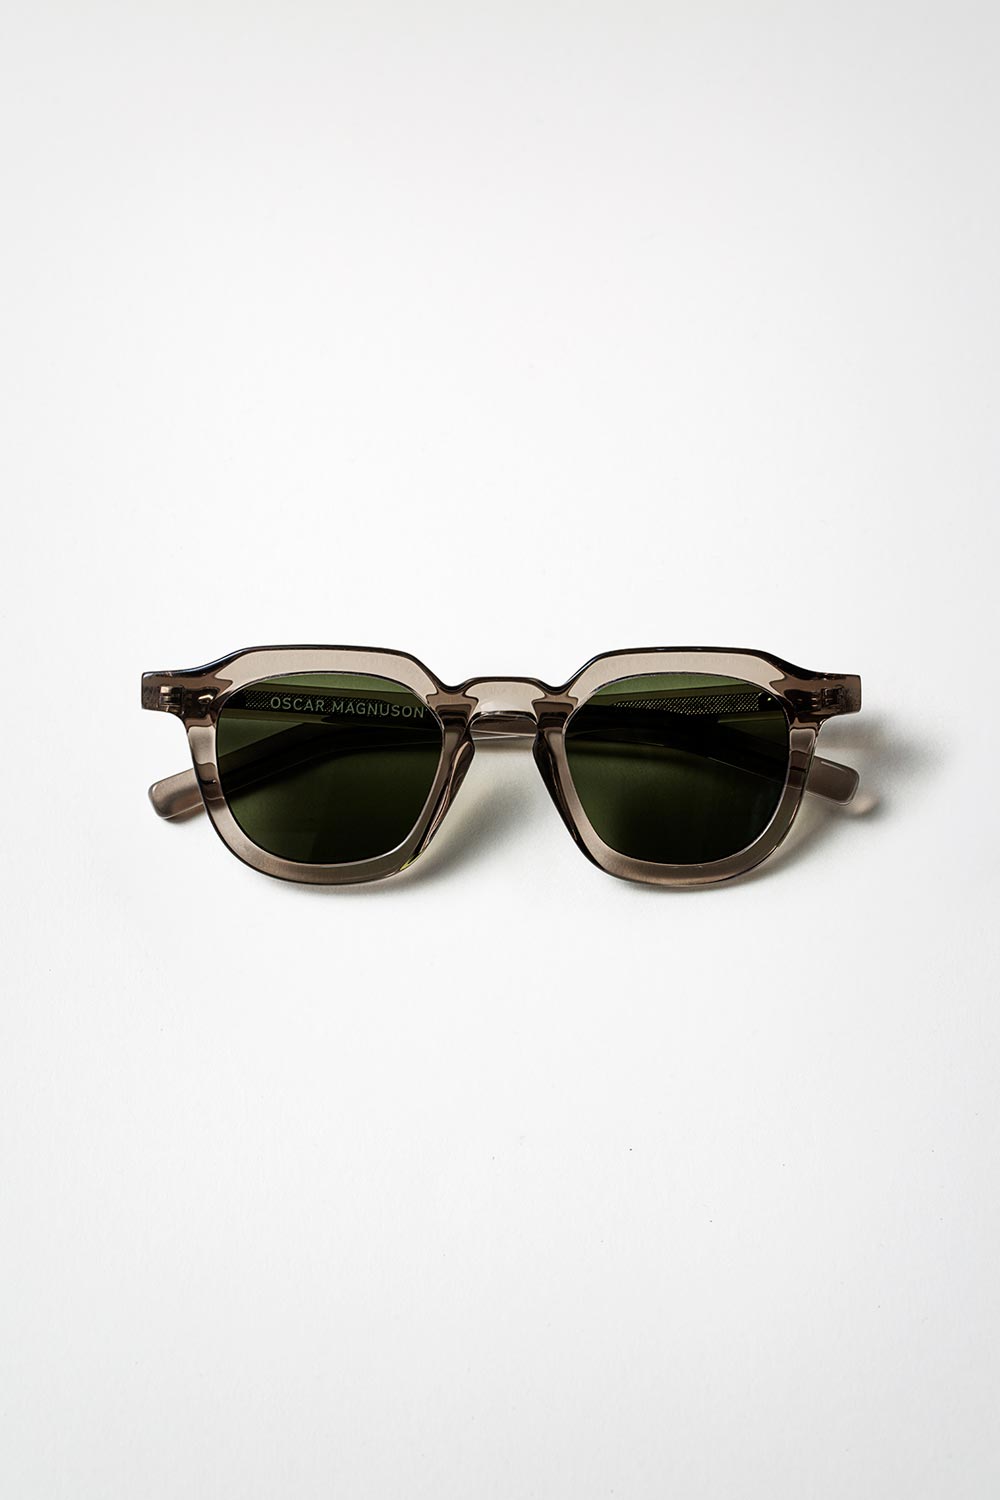 Amazon.com: Gucci Urban Oversized Sunglasses, Lens-59 Bridge-11 Temple-145,  Black / Green / Black : Clothing, Shoes & Jewelry